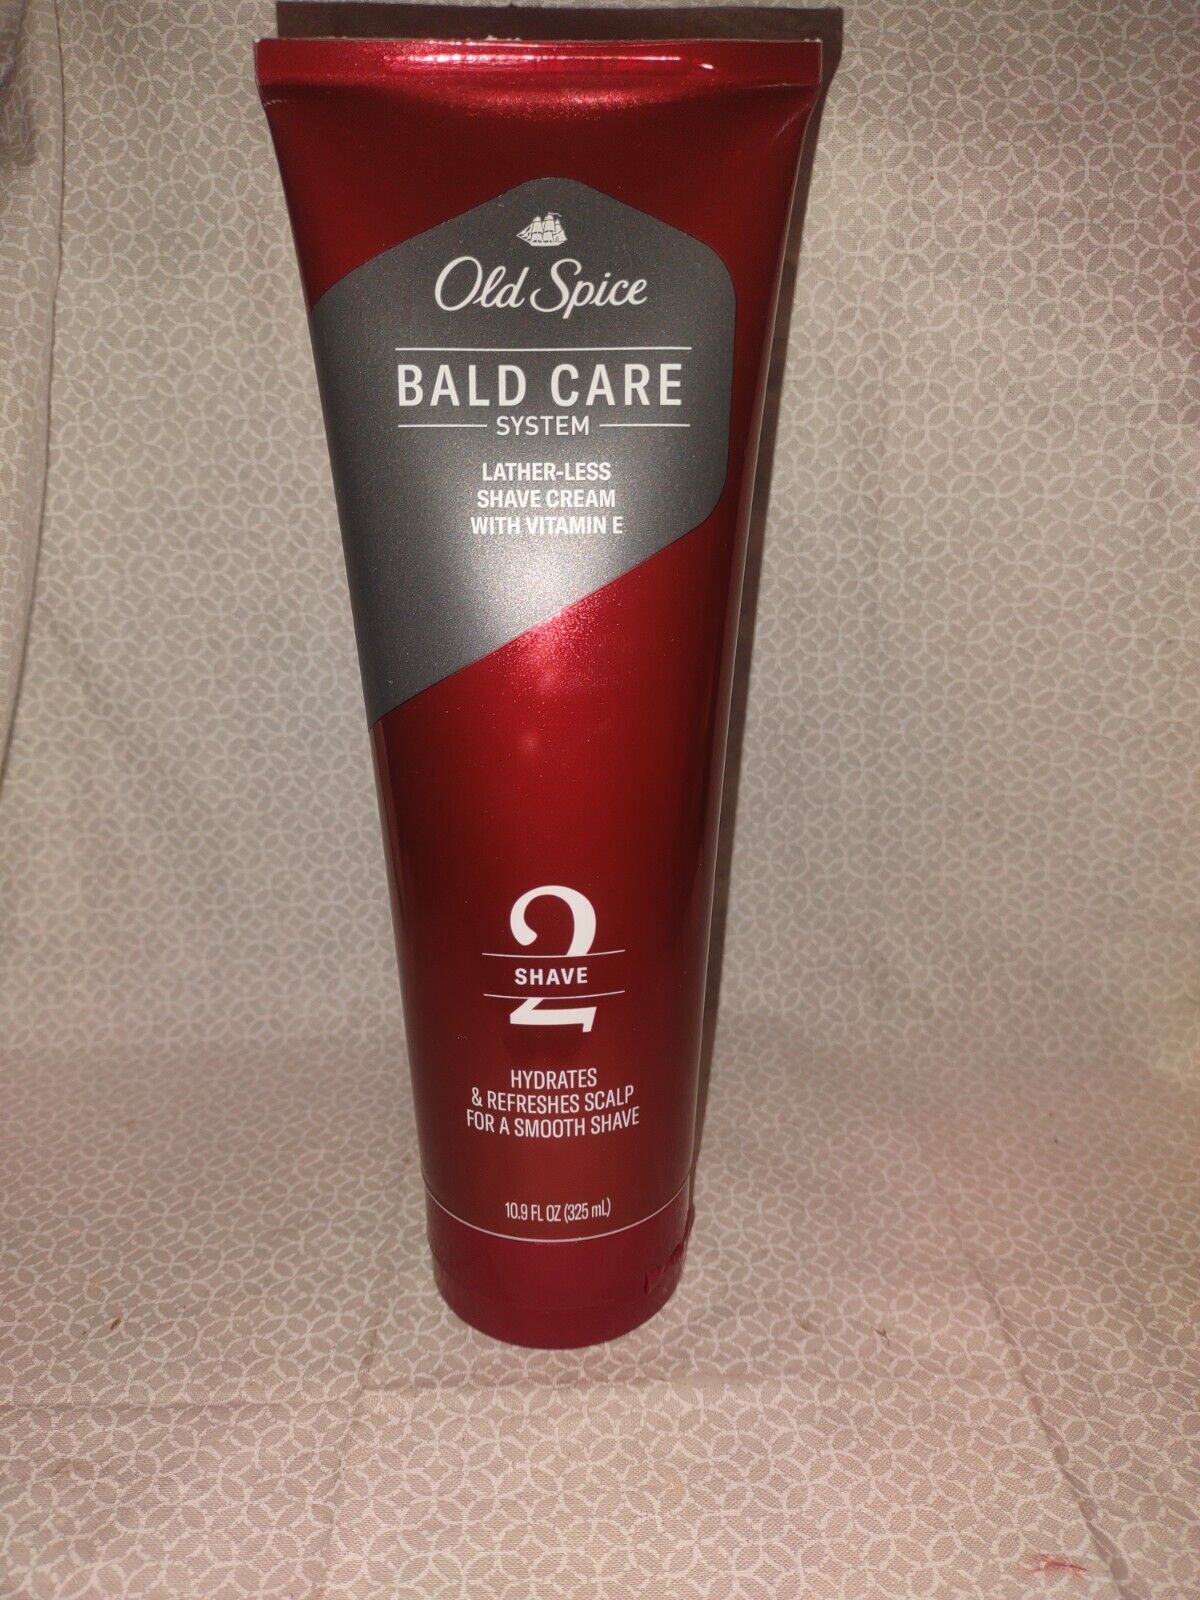 Old Spice Bald Care System - Steps 1-3